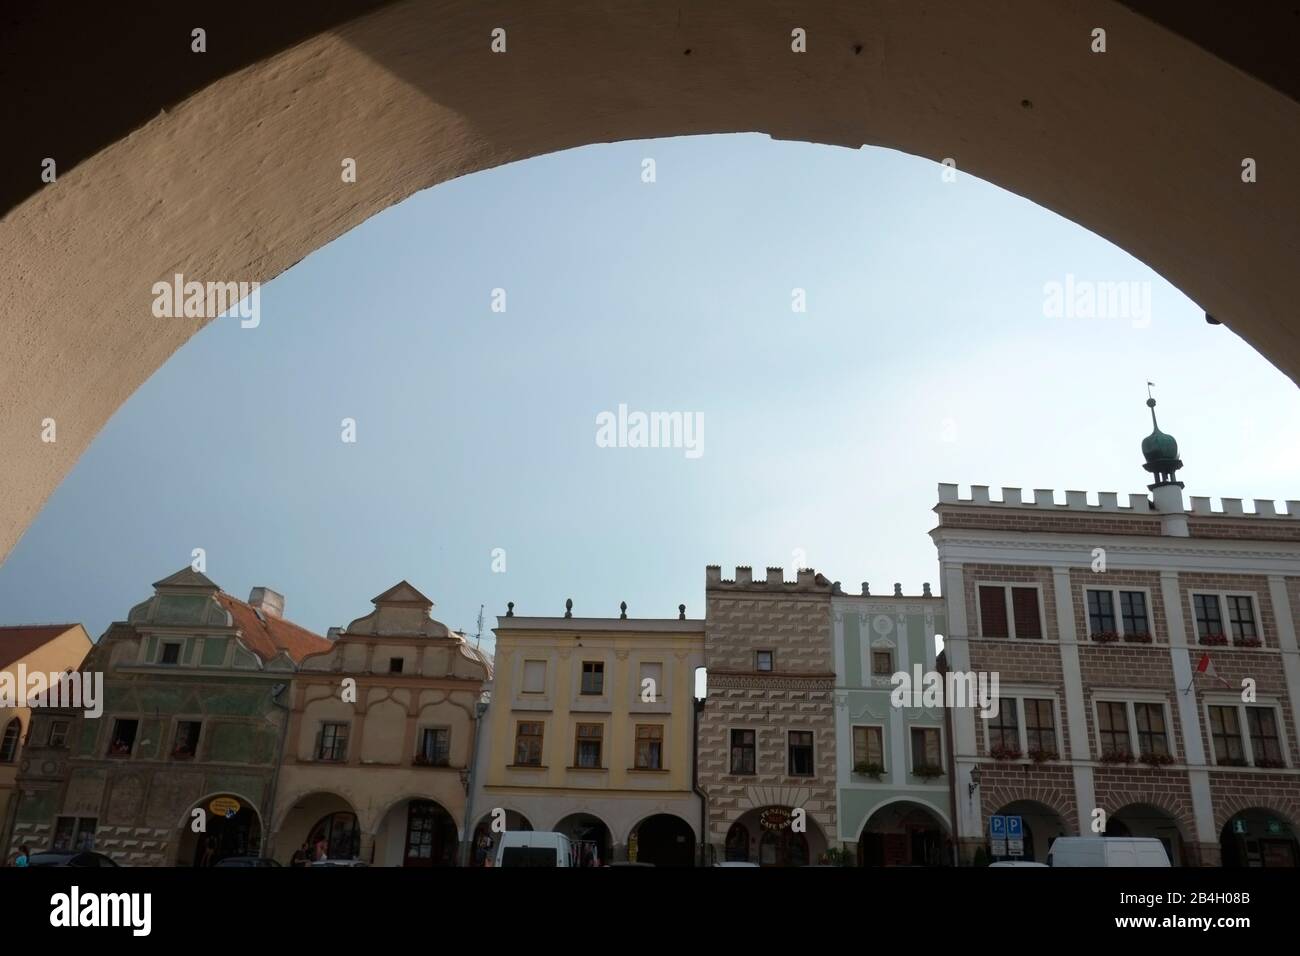 Renaissance town of Telc, Czech Republic where Werner Herzog filmed the movie Woyzeck . UNESCO World Heritage Site Stock Photo